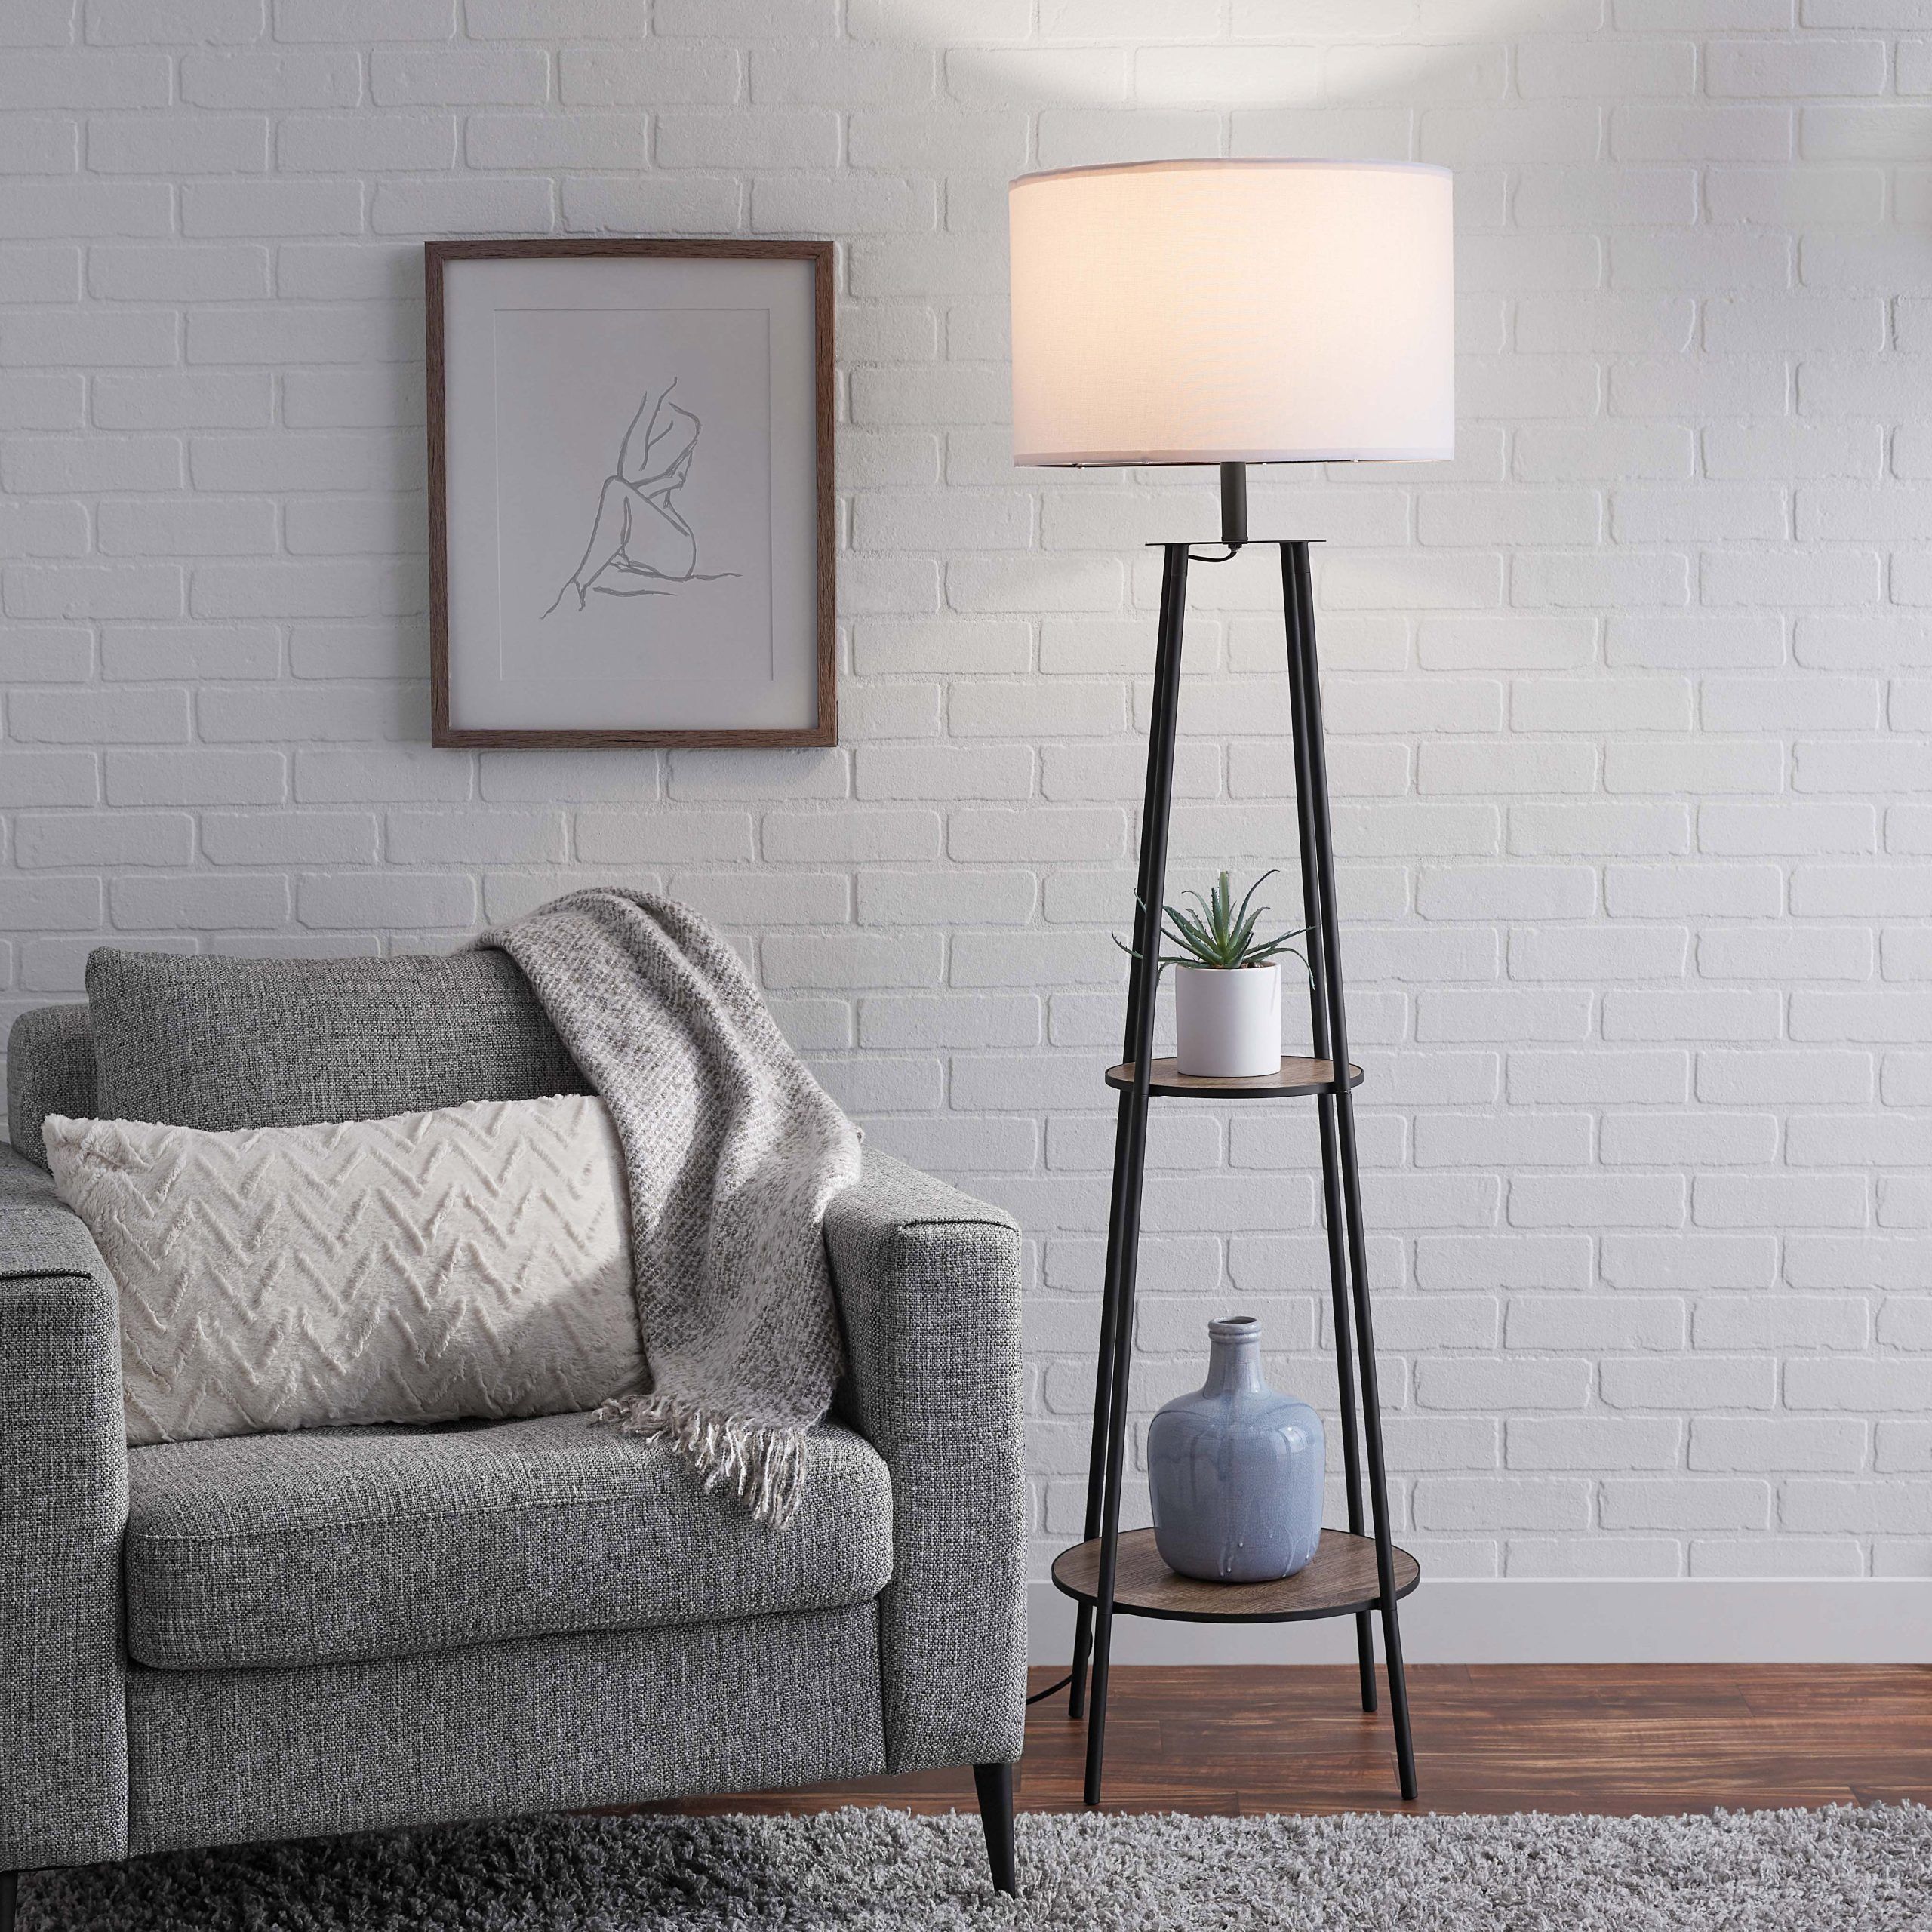 2019 Matte Black Floor Lamps Regarding Mainstays Etagere Matte Black Floor Lamp, With 2 Wood Shelves, Black Color  – Walmart (View 5 of 15)